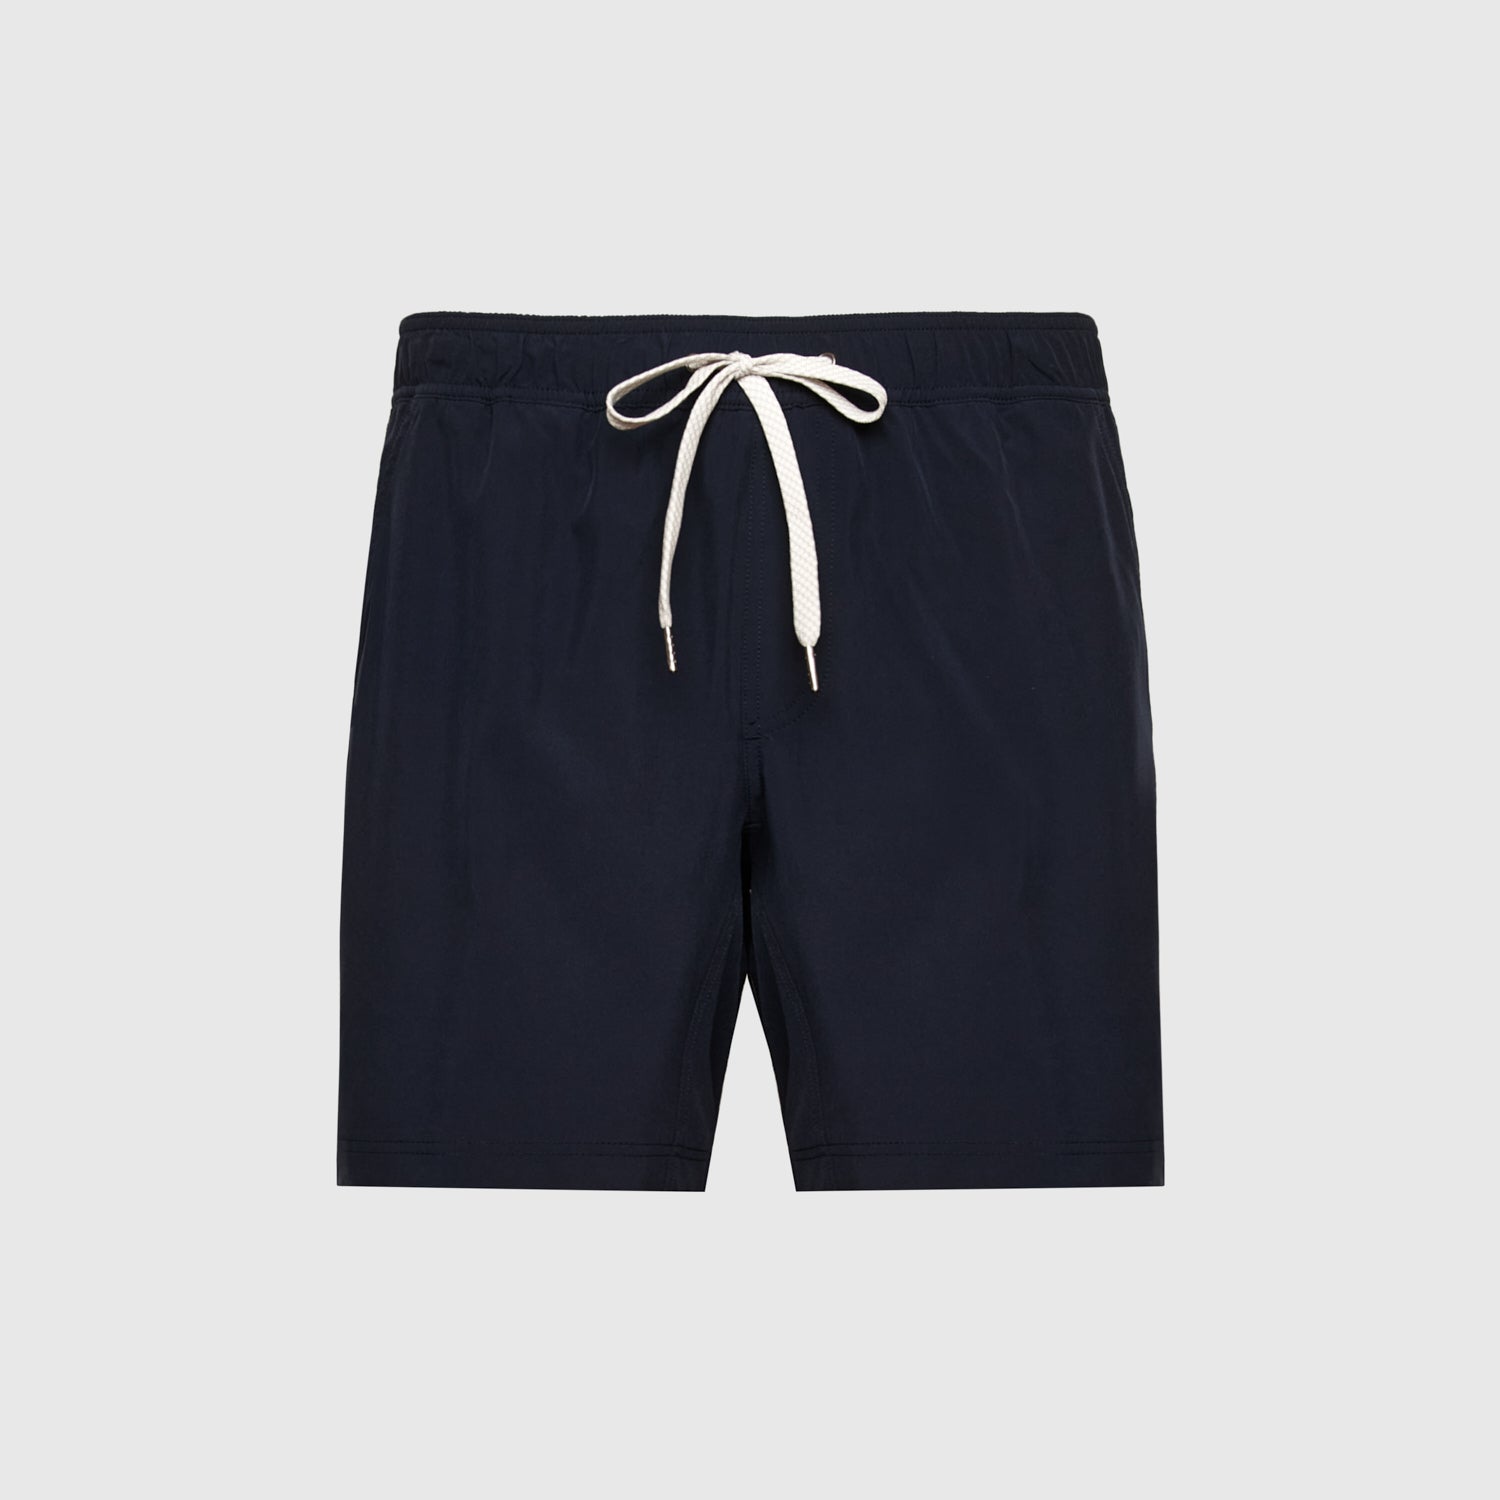 Navy Fleece Shorts – True Classic